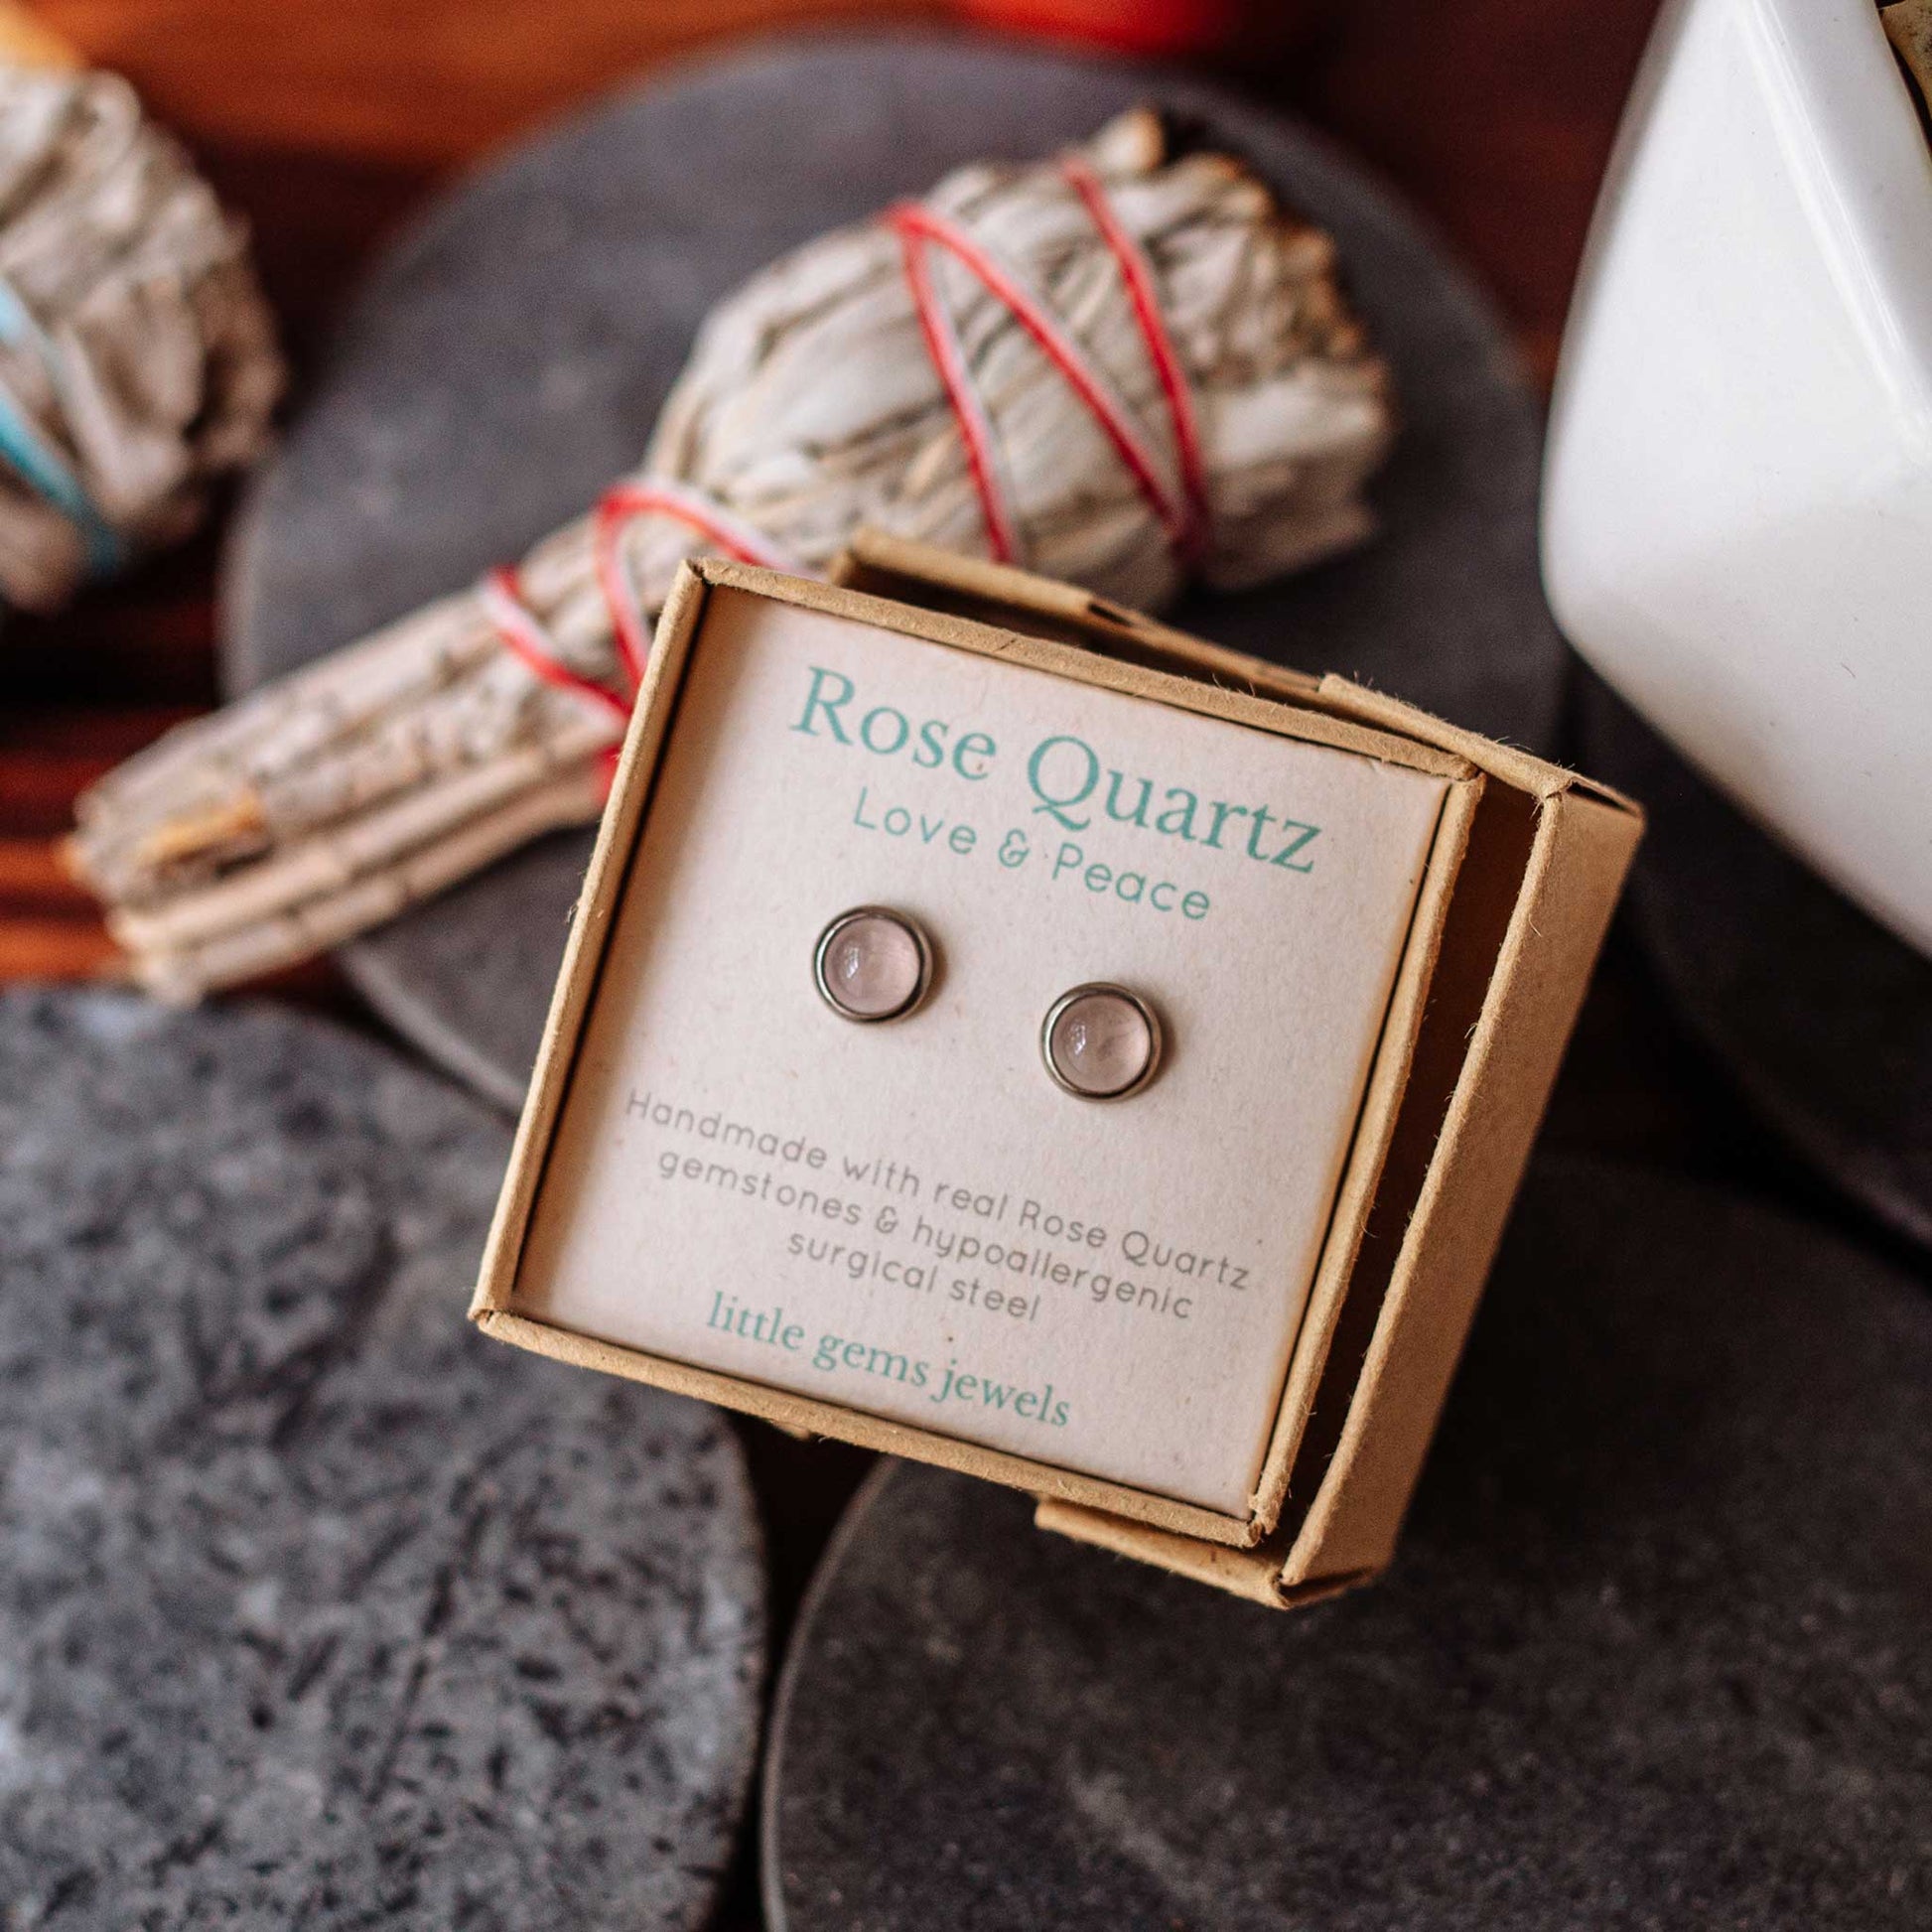 Rose Quartz for self love and inner peace gemstone stud earrings in eco friendly gift box